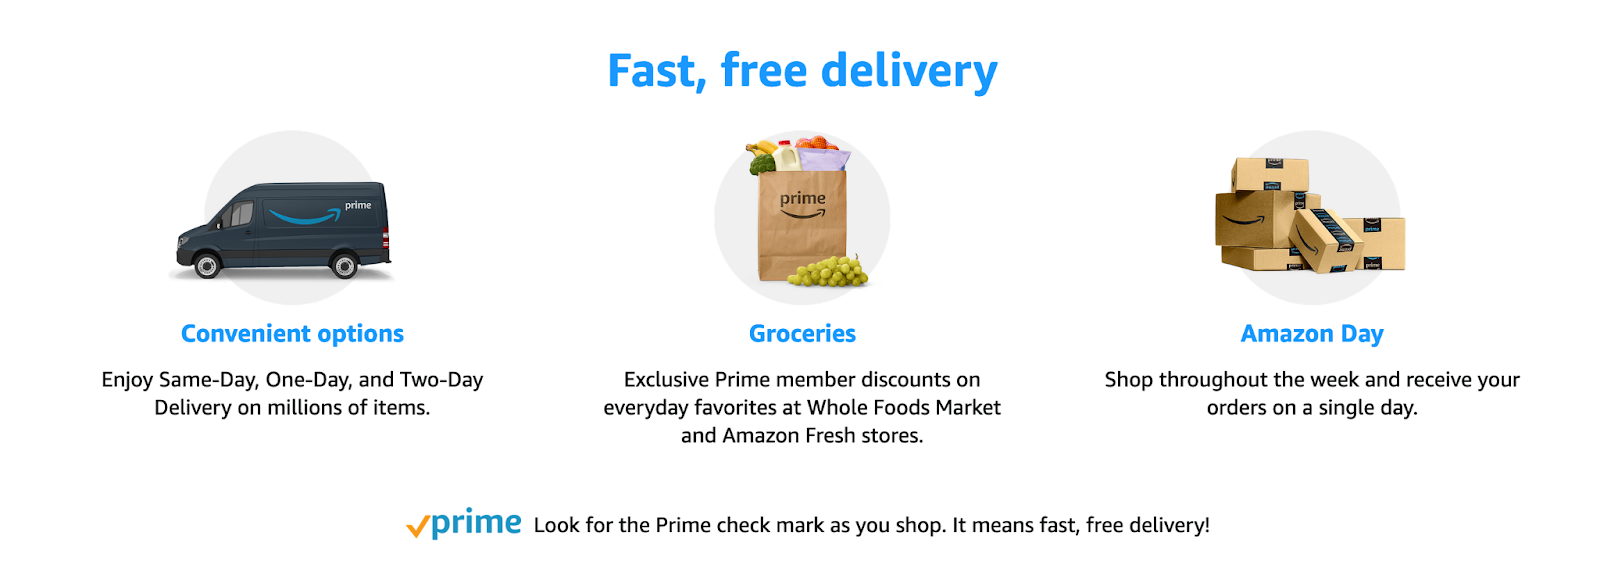 Amazon delivery benefits